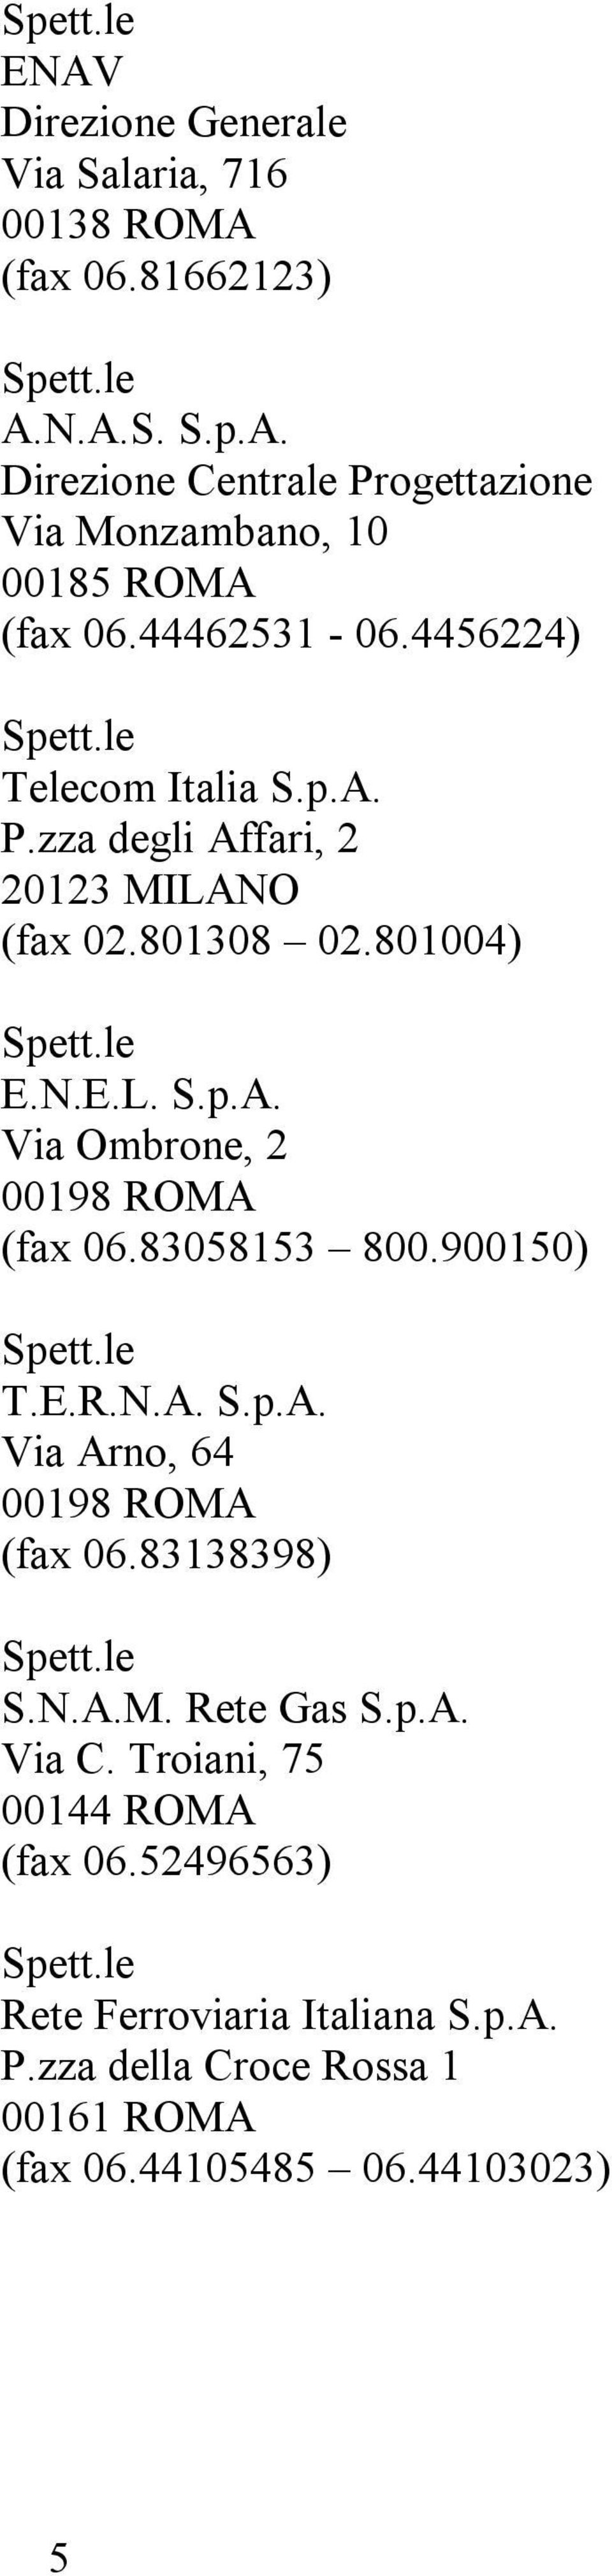 83058153 800.900150) T.E.R.N.A. S.p.A. Via Arno, 64 00198 ROMA (fax 06.83138398) S.N.A.M. Rete Gas S.p.A. Via C.